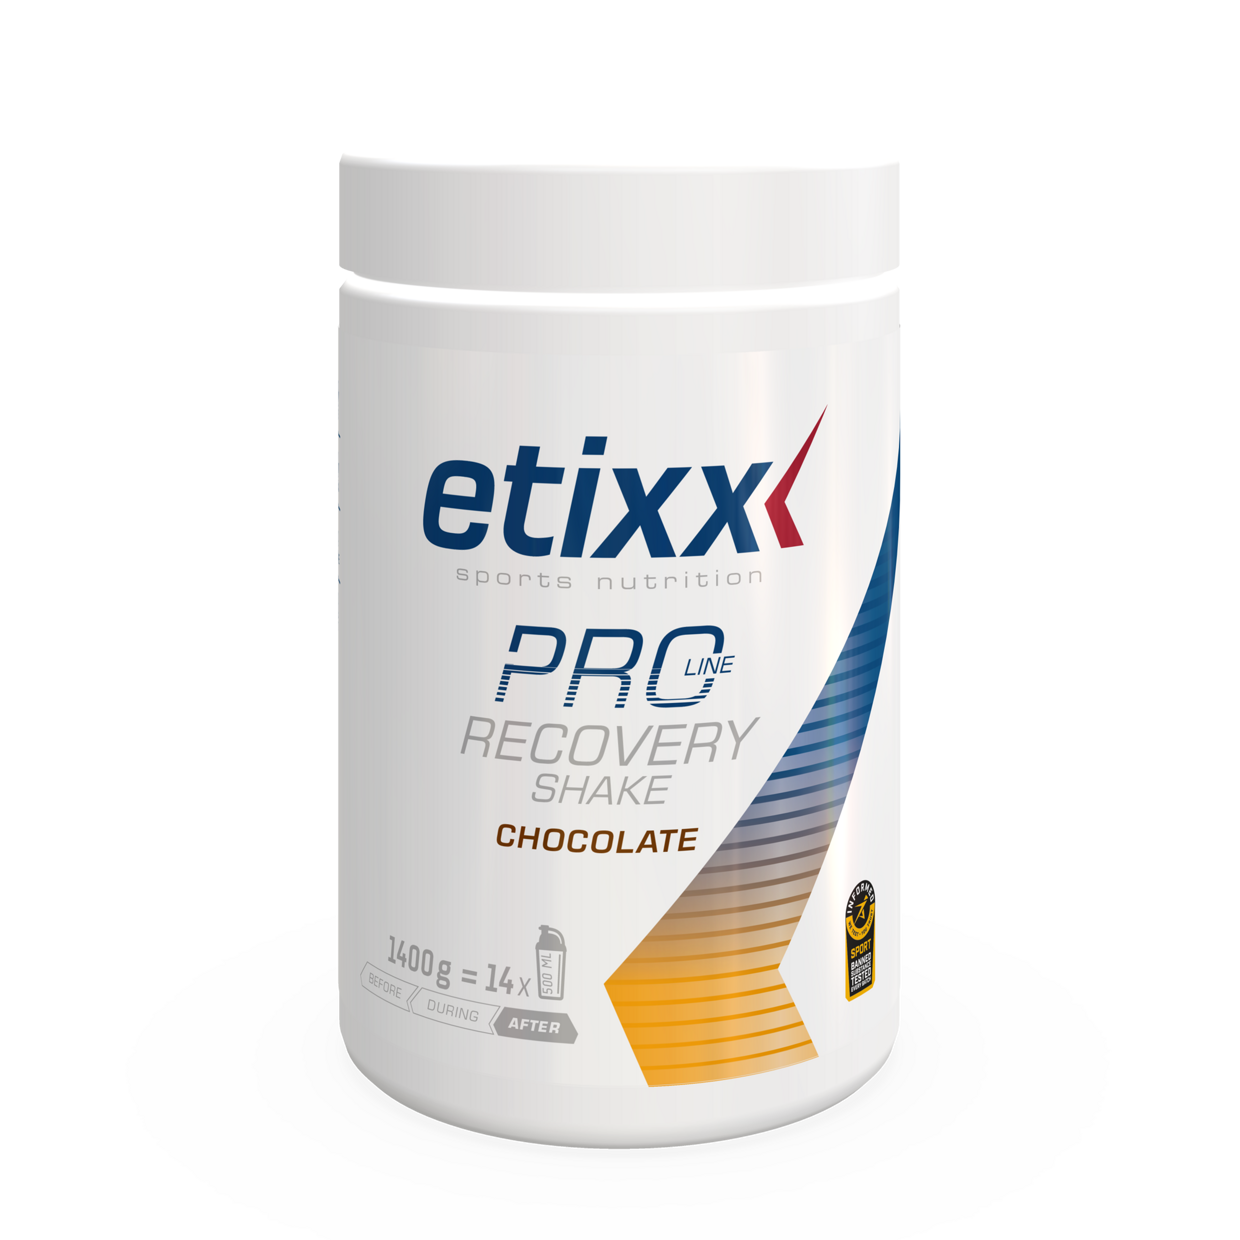 ETIXX RECOVERY SHAKE PRO LINE CHOCOLATE 1400G